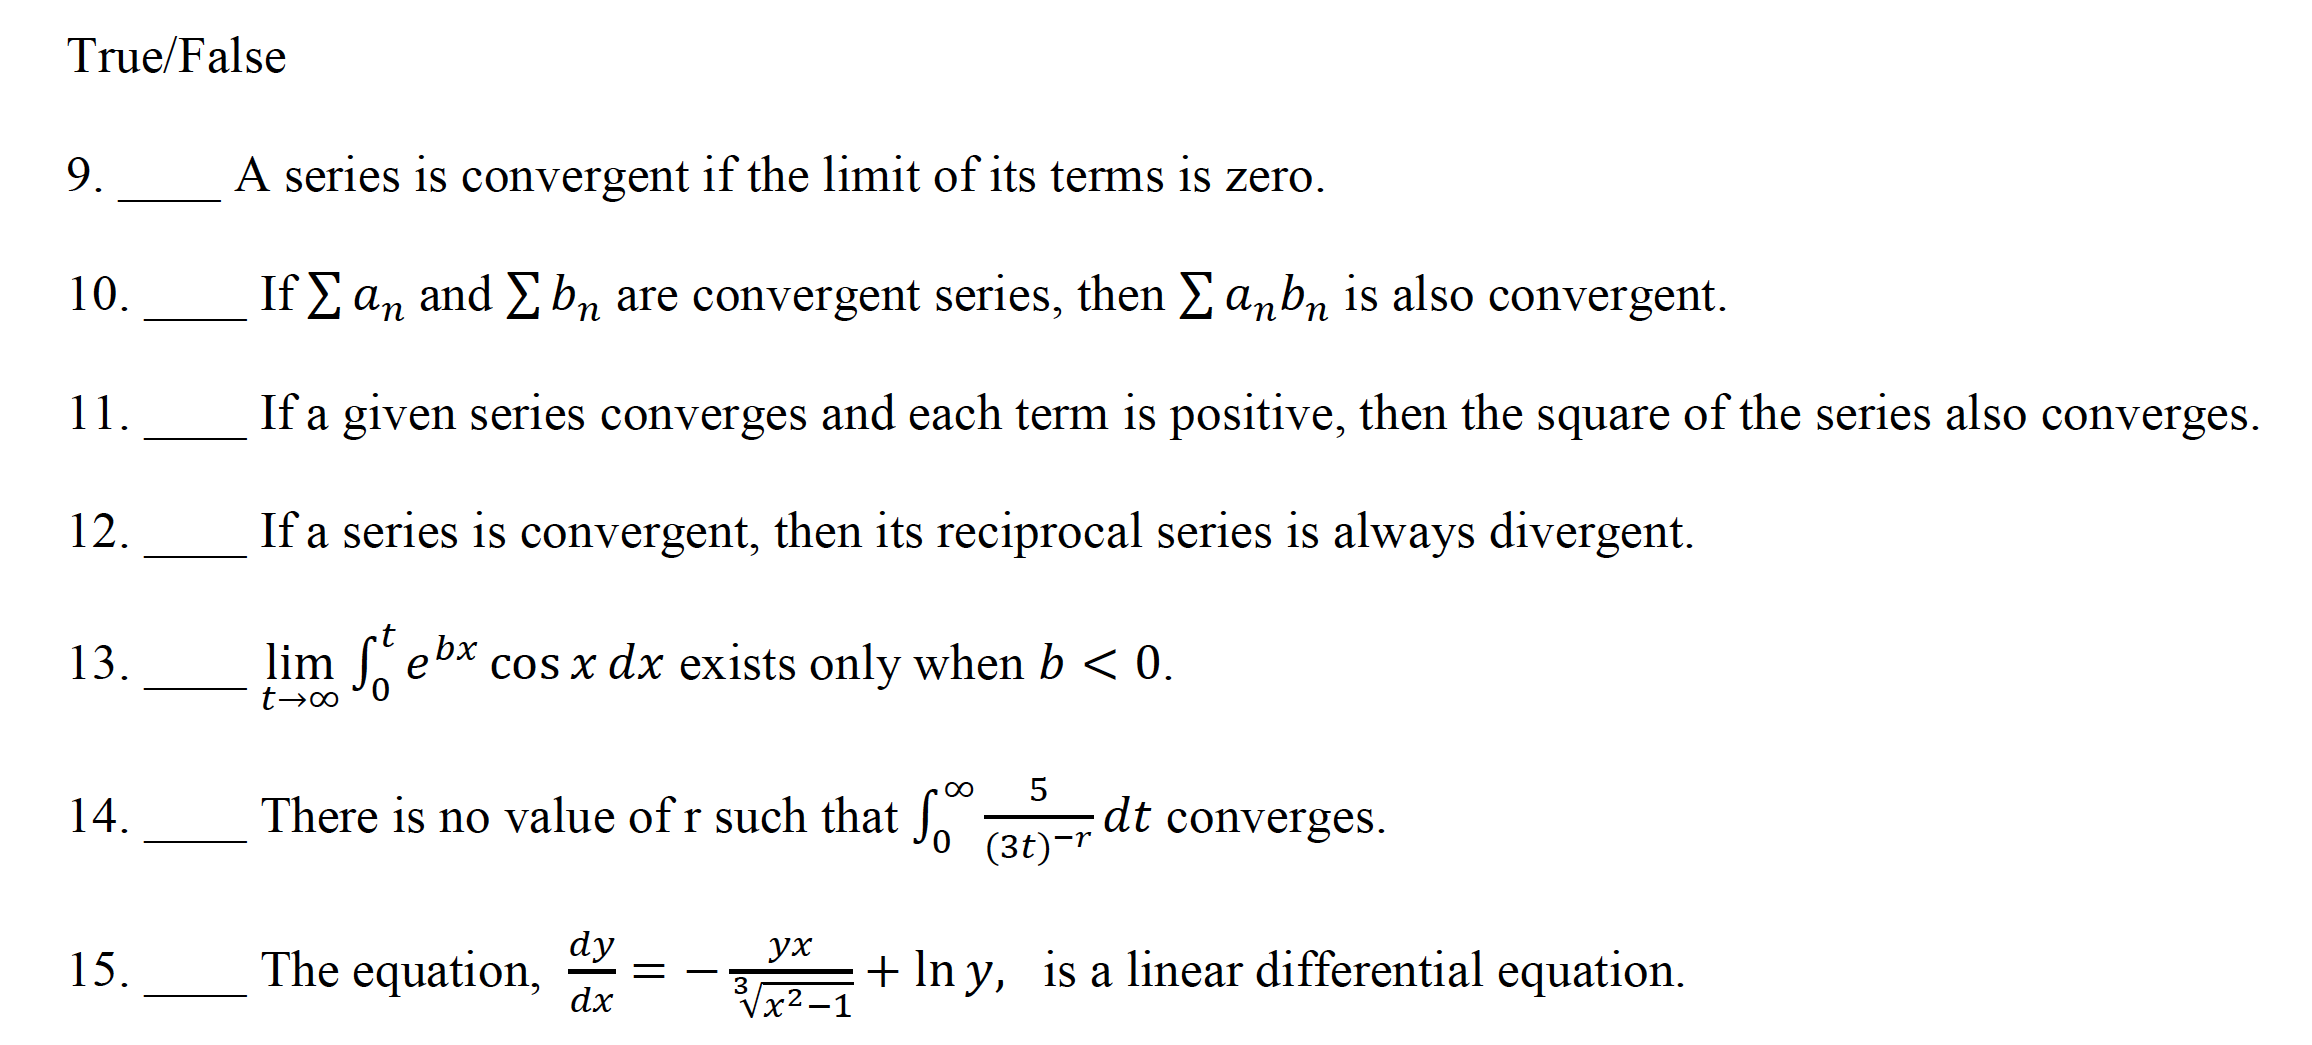 IfΣ α, and Σ bp
and E bn
are convergent series, then E anbn is also convergent.
10.
E an
